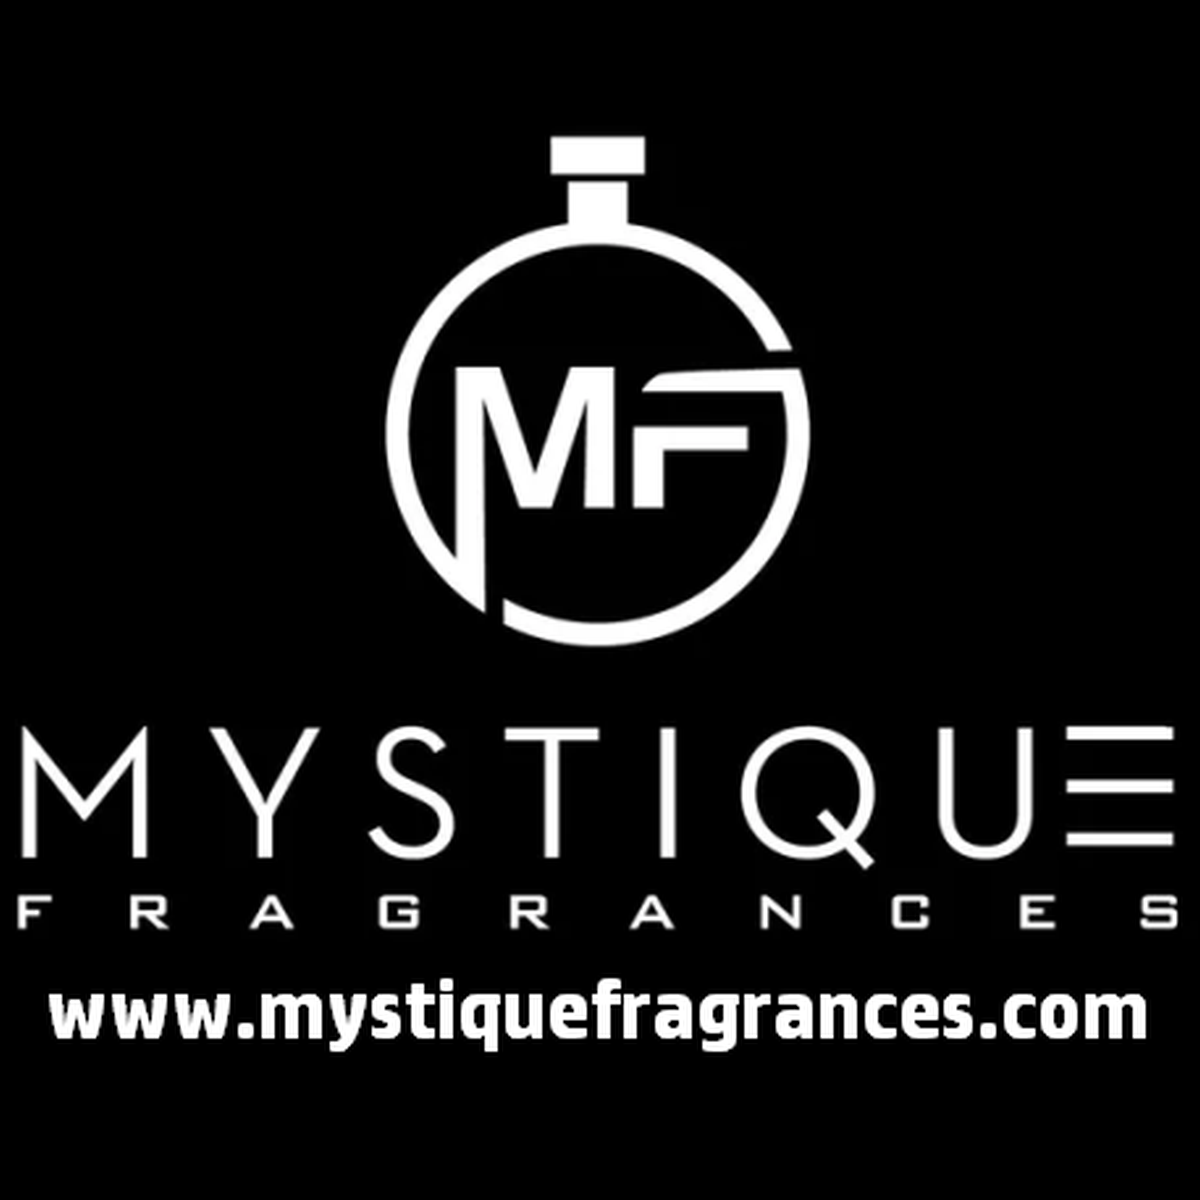 fragrances-mystiquefragrances-logo-1200x1200.png